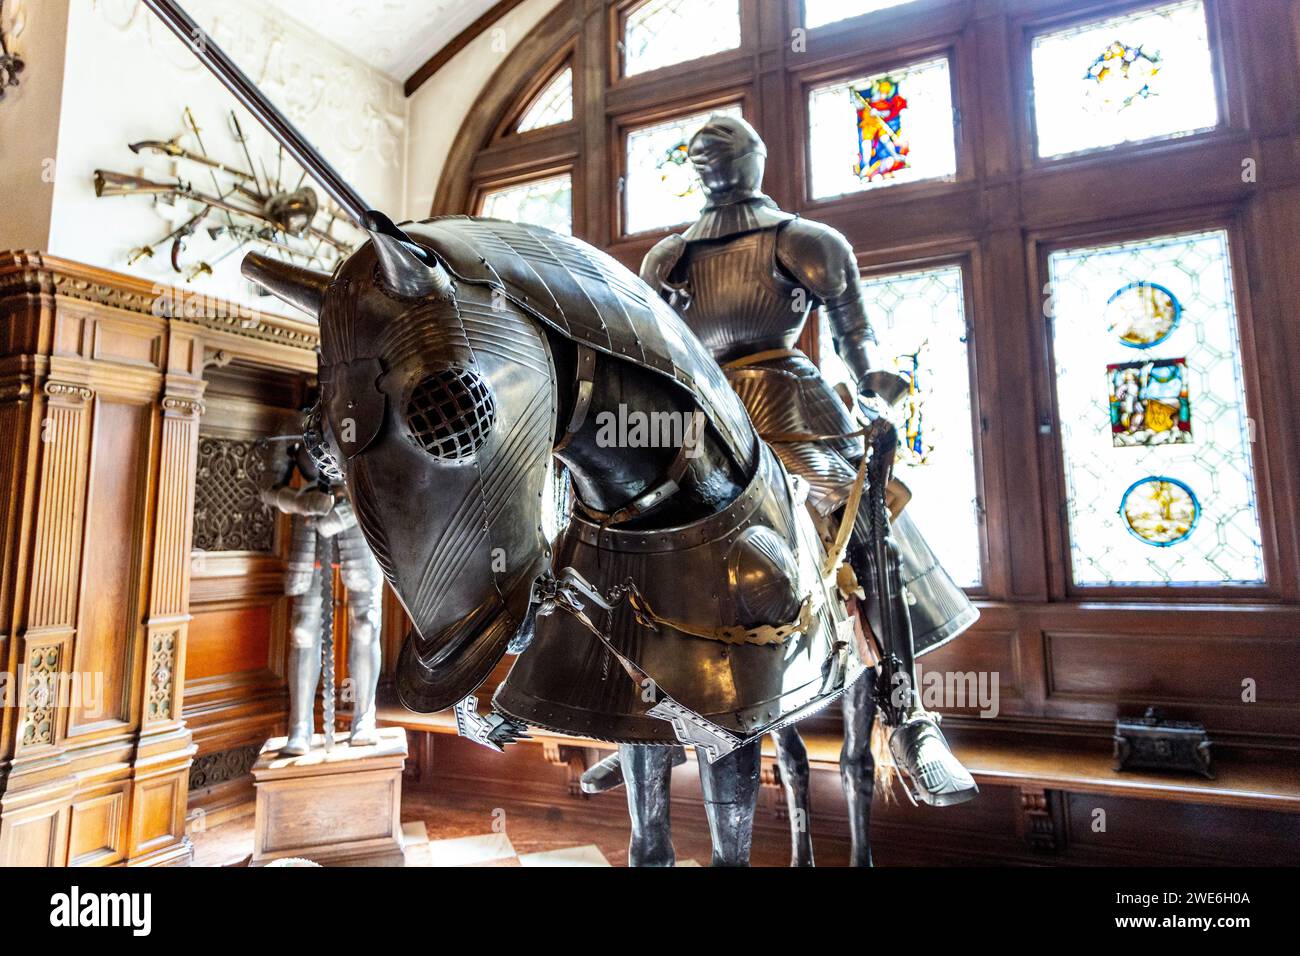 16th century full horse and knight Maximillian armour in the Armoury Halls of Peles Castle, Sinaia, Romania Stock Photo